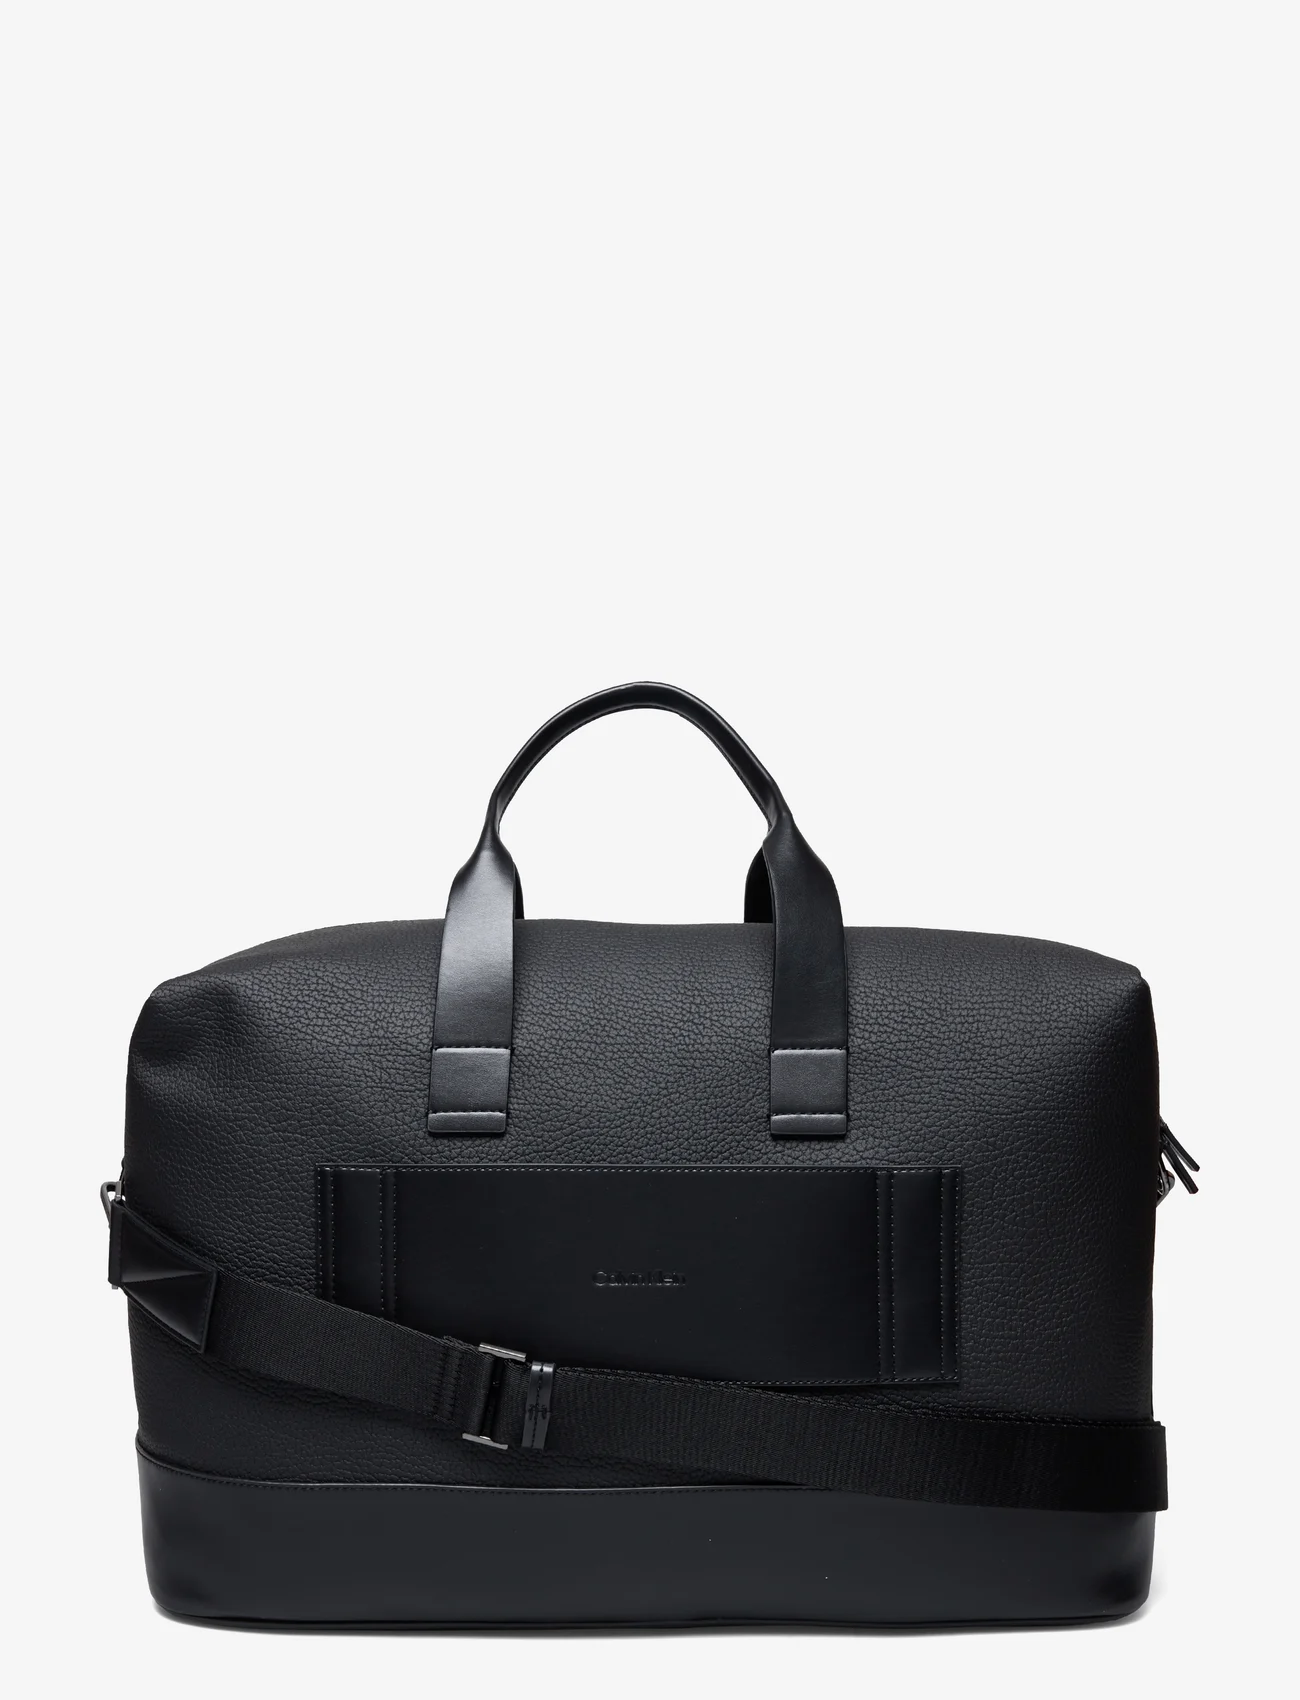 Calvin Klein - MODERN BAR WEEKENDER - laisvalaikio krepšiai - ck black - 0